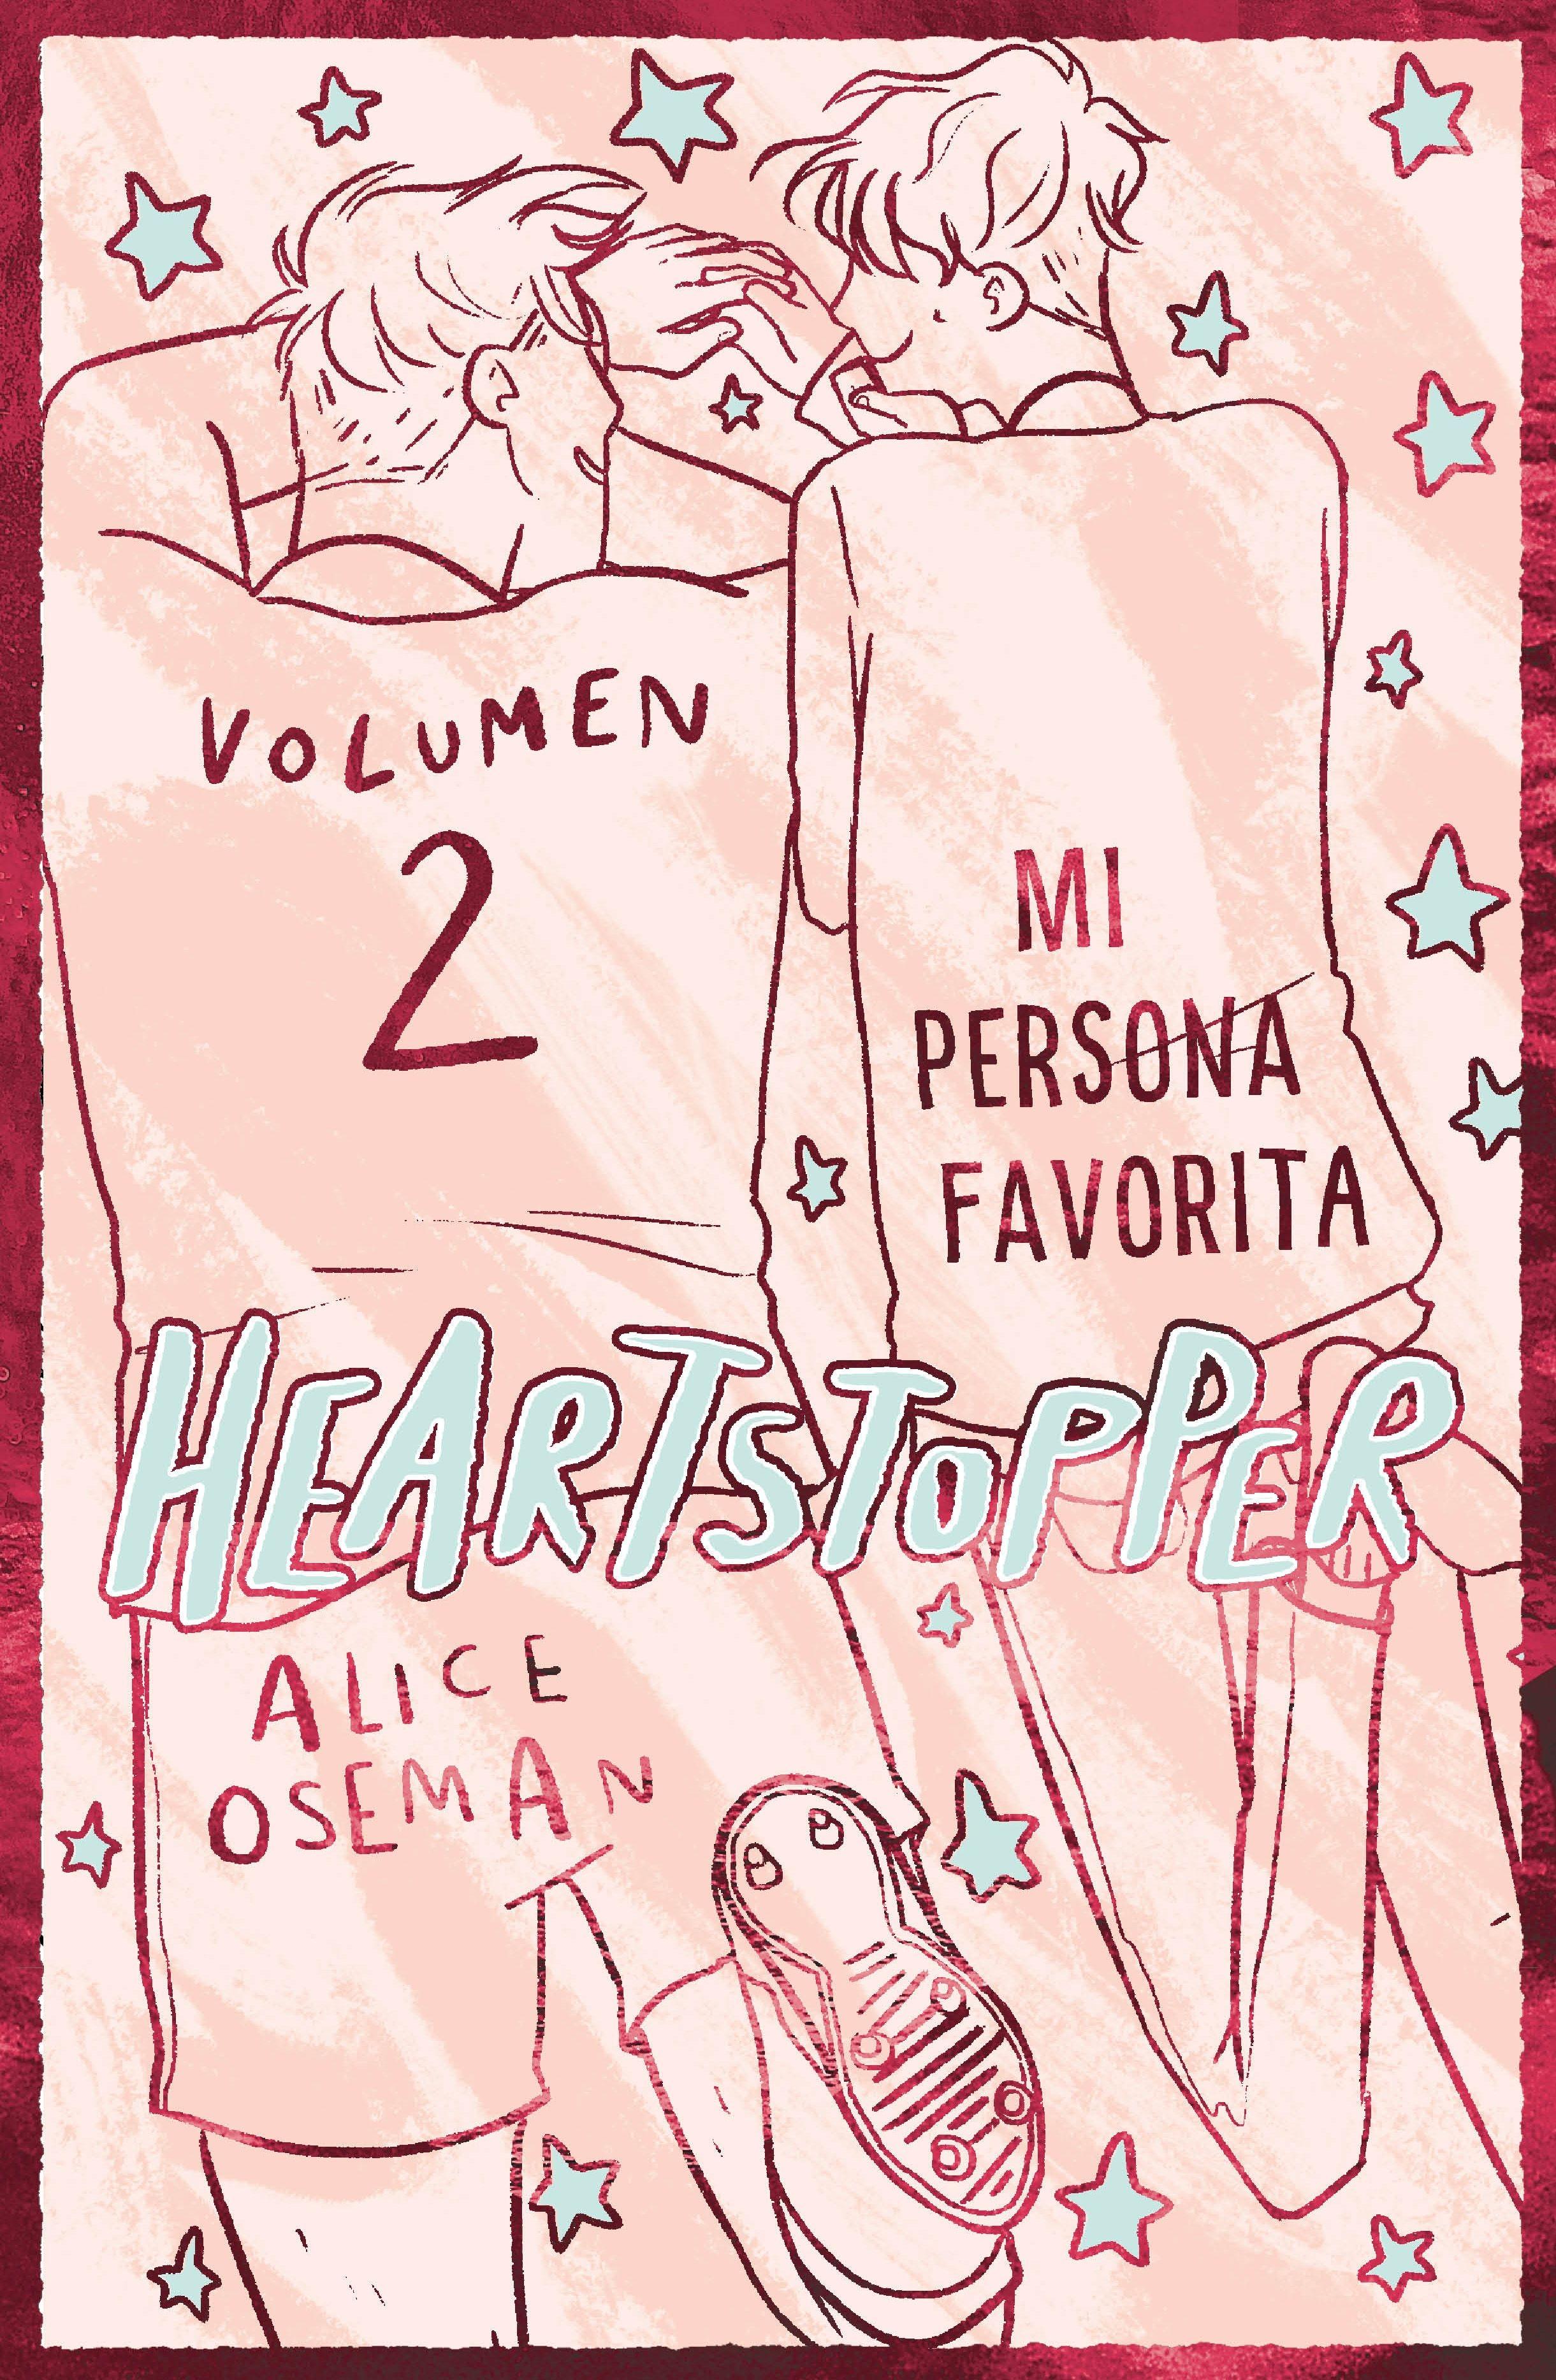 Heartstopper 2. mi Persona Favorita (Ed. Especial). 